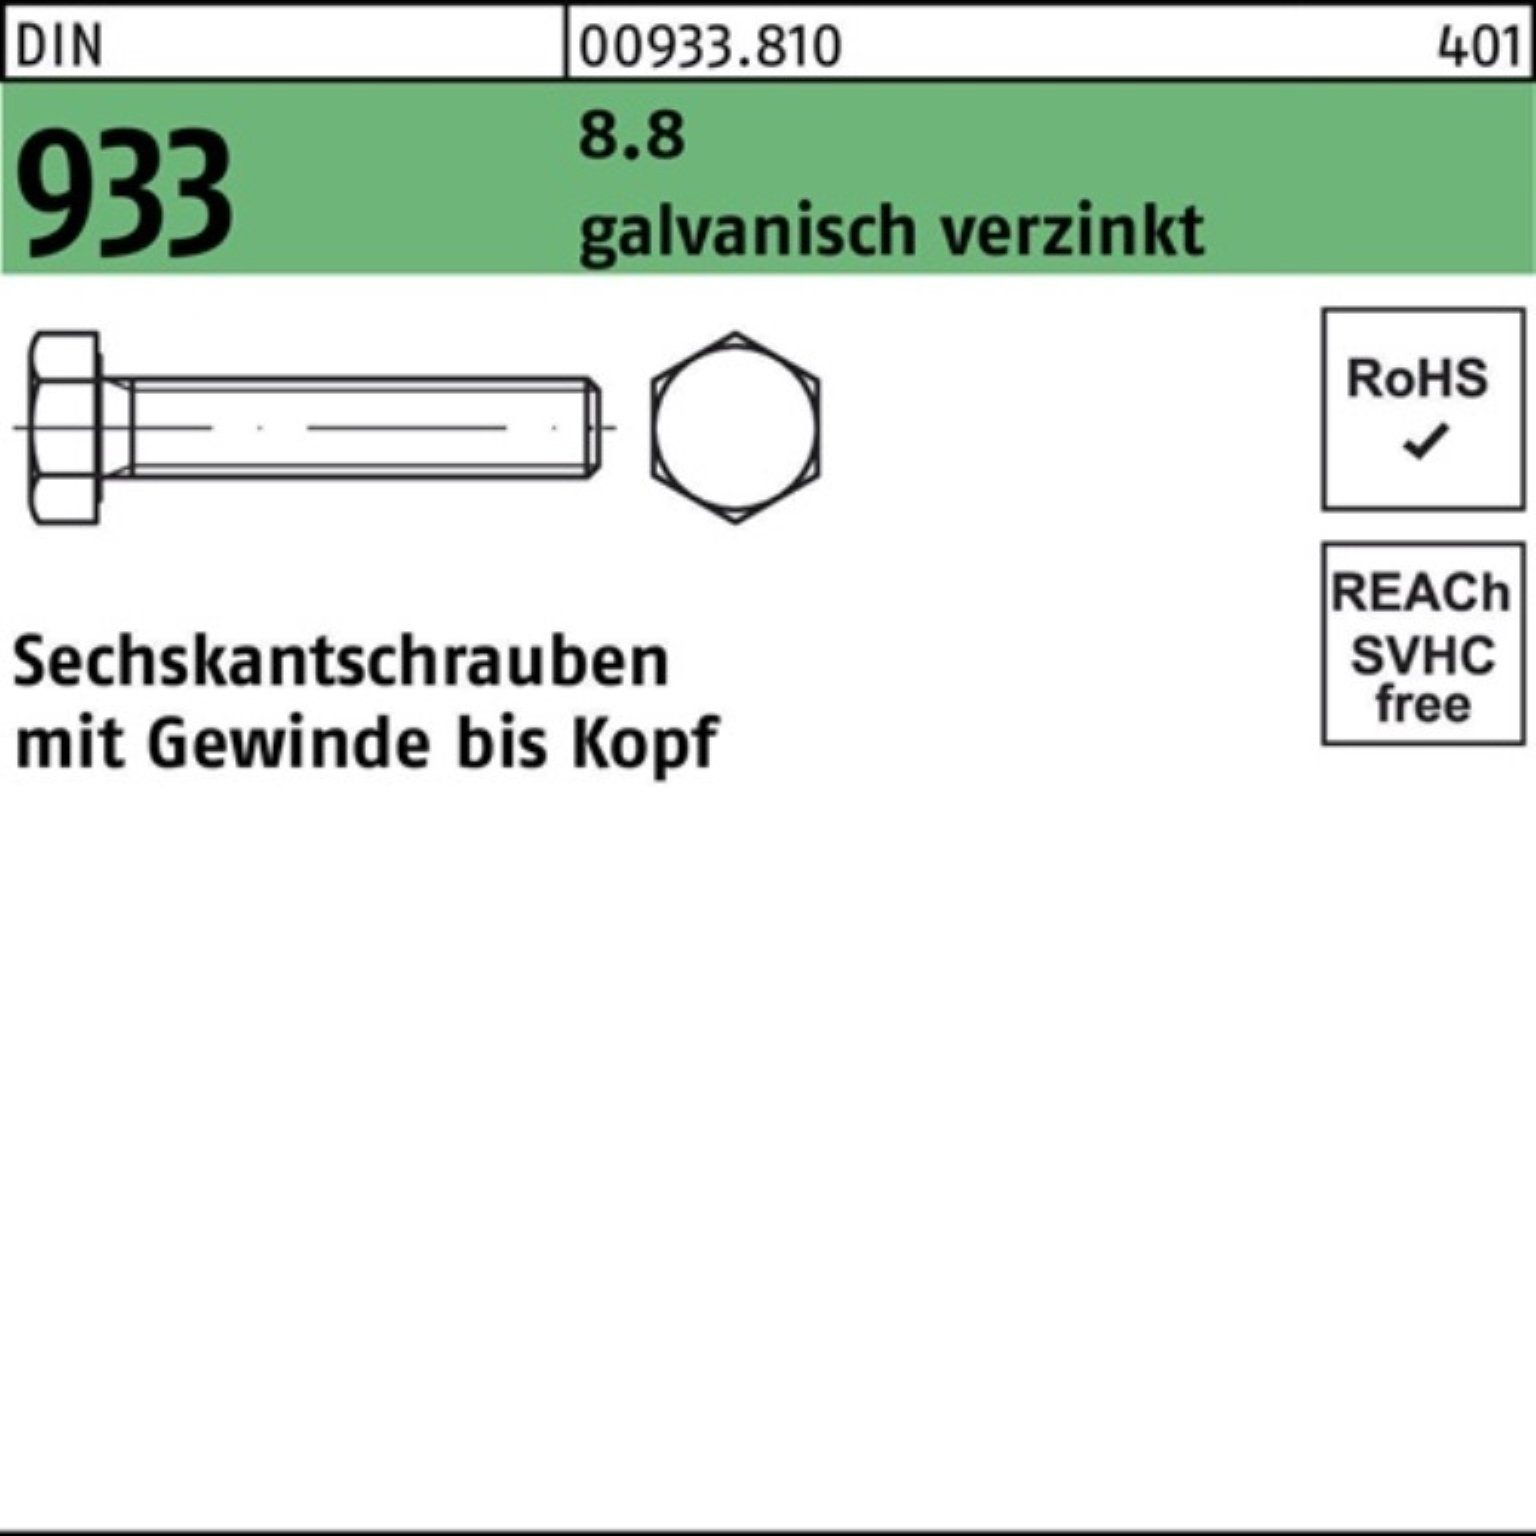 galv.verz. Reyher VG Sechskantschraube Sechskantschraube 30 Stü 8.8 M6x 500 500er DIN Pack 933